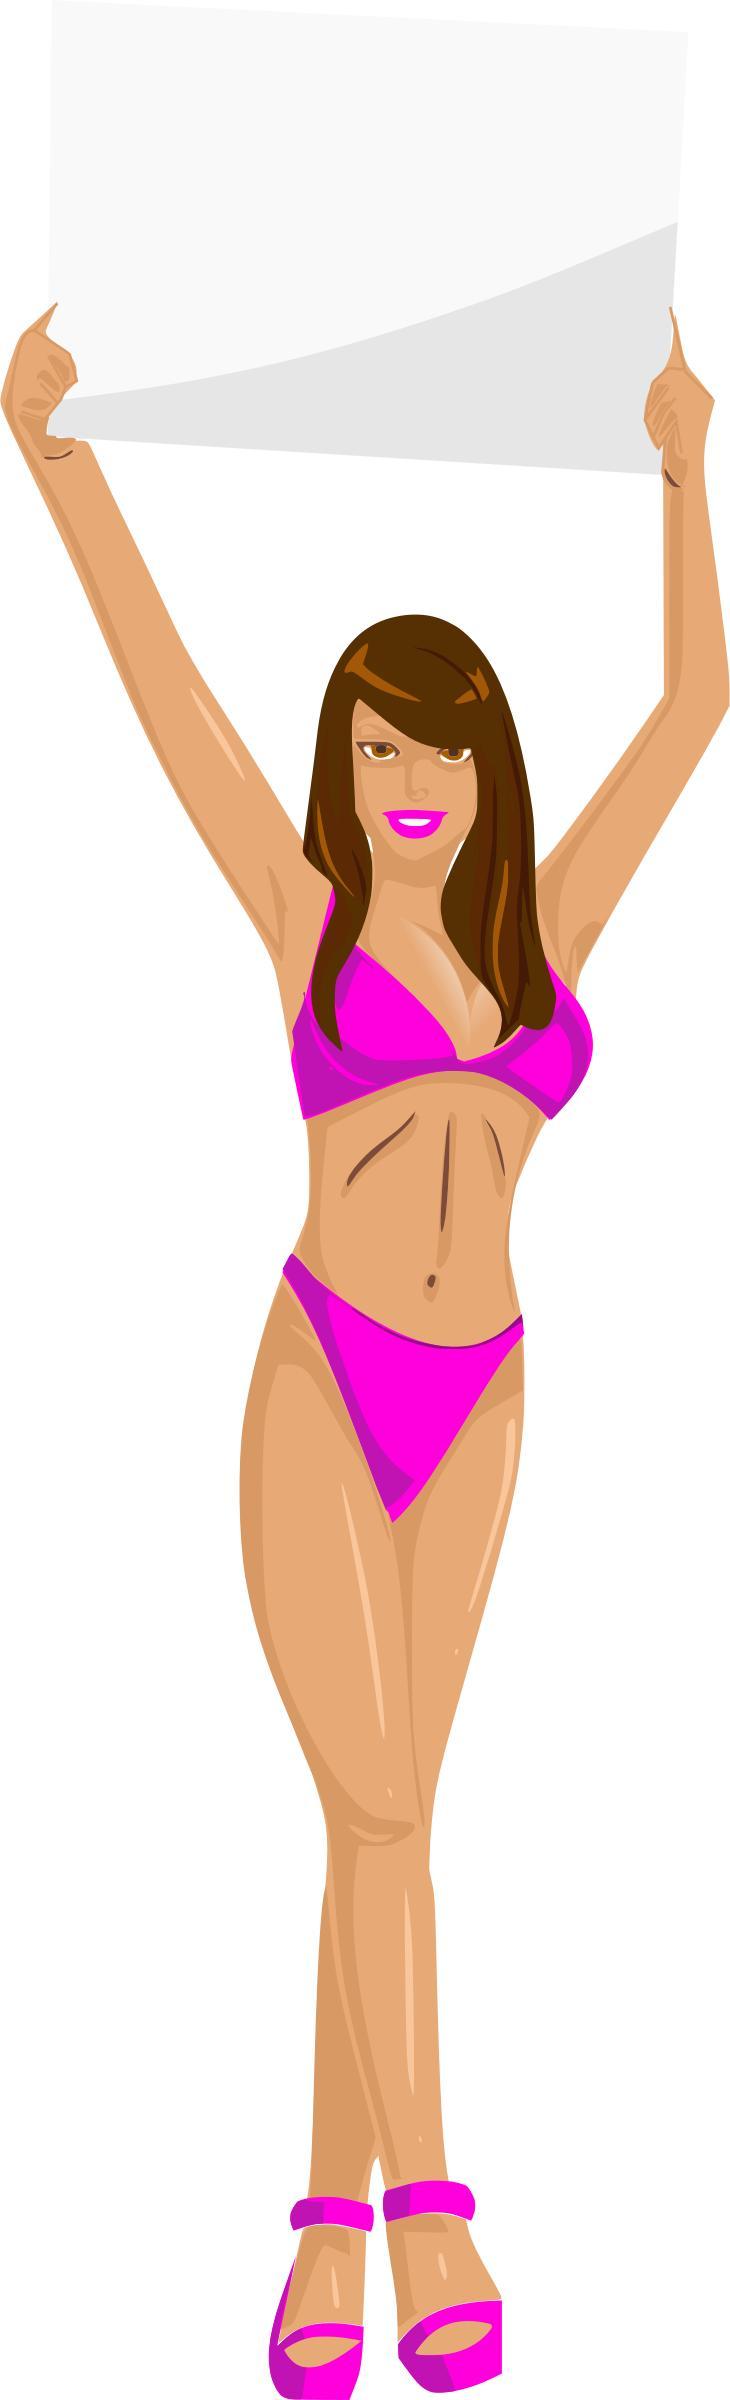 Girl with sign (pink bikini, brown hair, light skin) png transparent